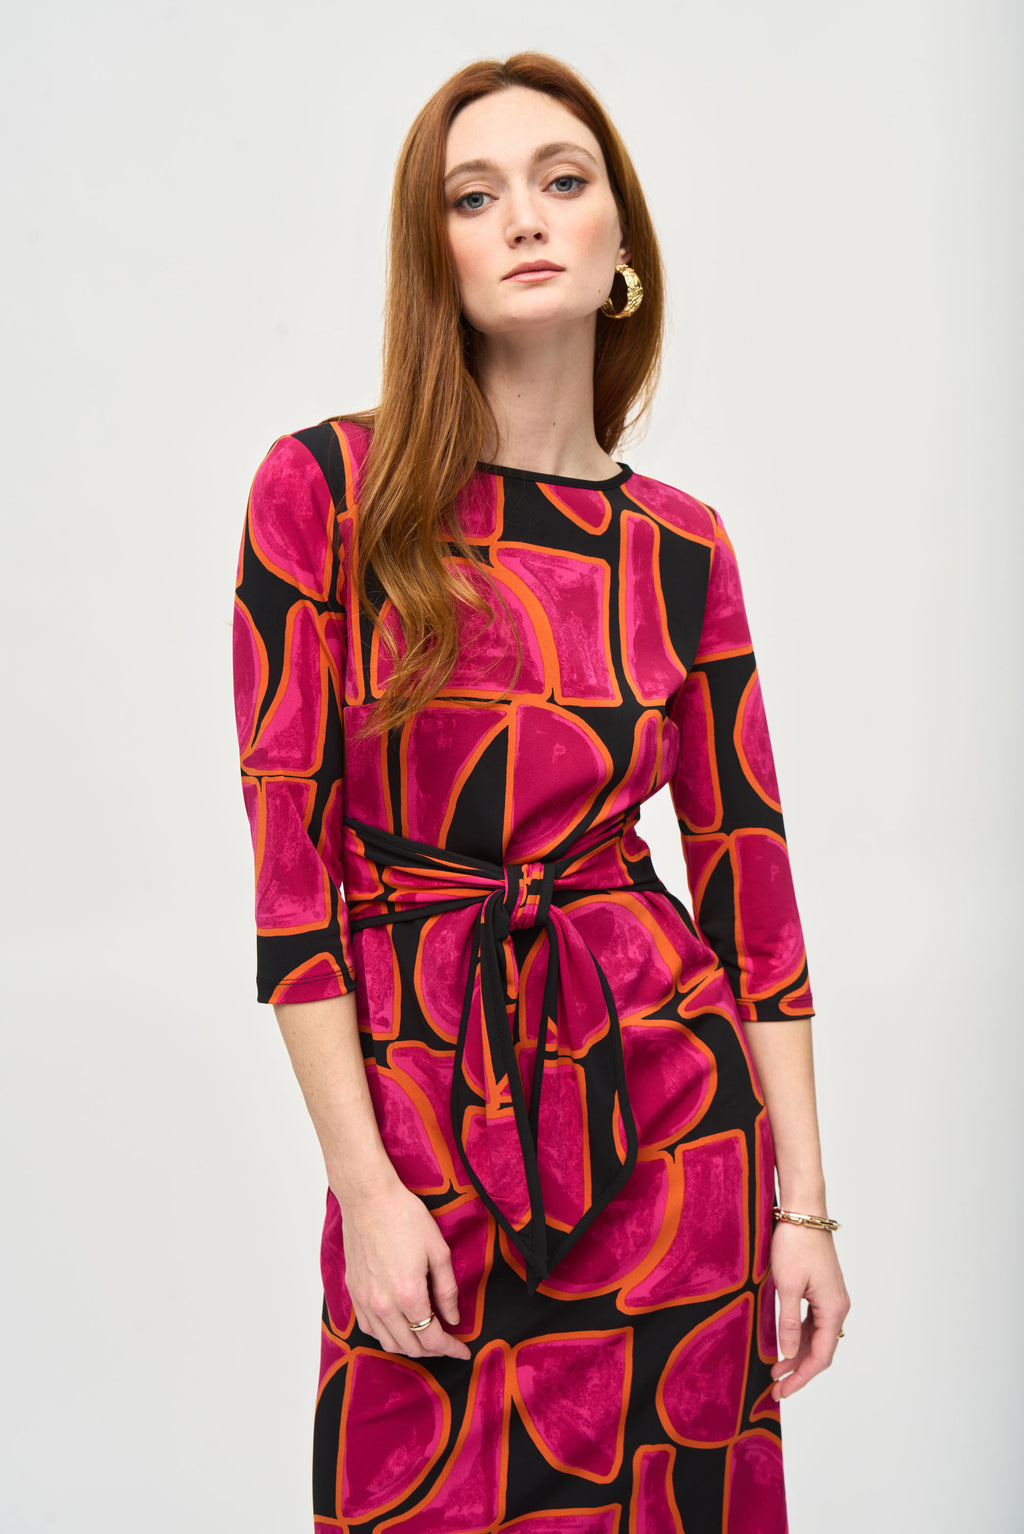 Joseph Ribkoff Black/Multi Abstract Print Sheath Dress Style 243297